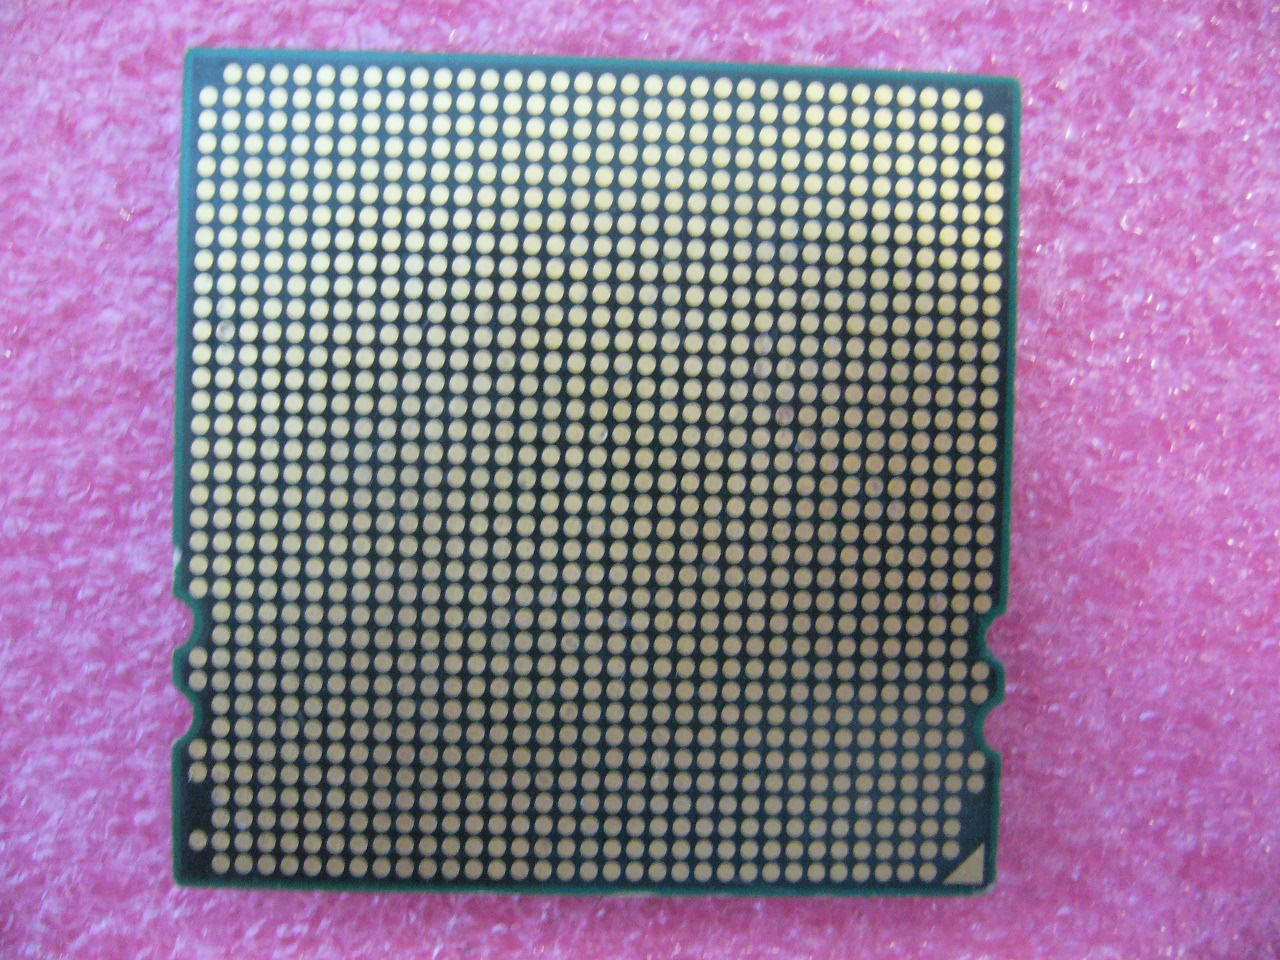 QTY 1x AMD Opteron 2435 2.6 GHz Six Core (OS2435WJS6DGN) CPU Socket F 1207 - zum Schließen ins Bild klicken